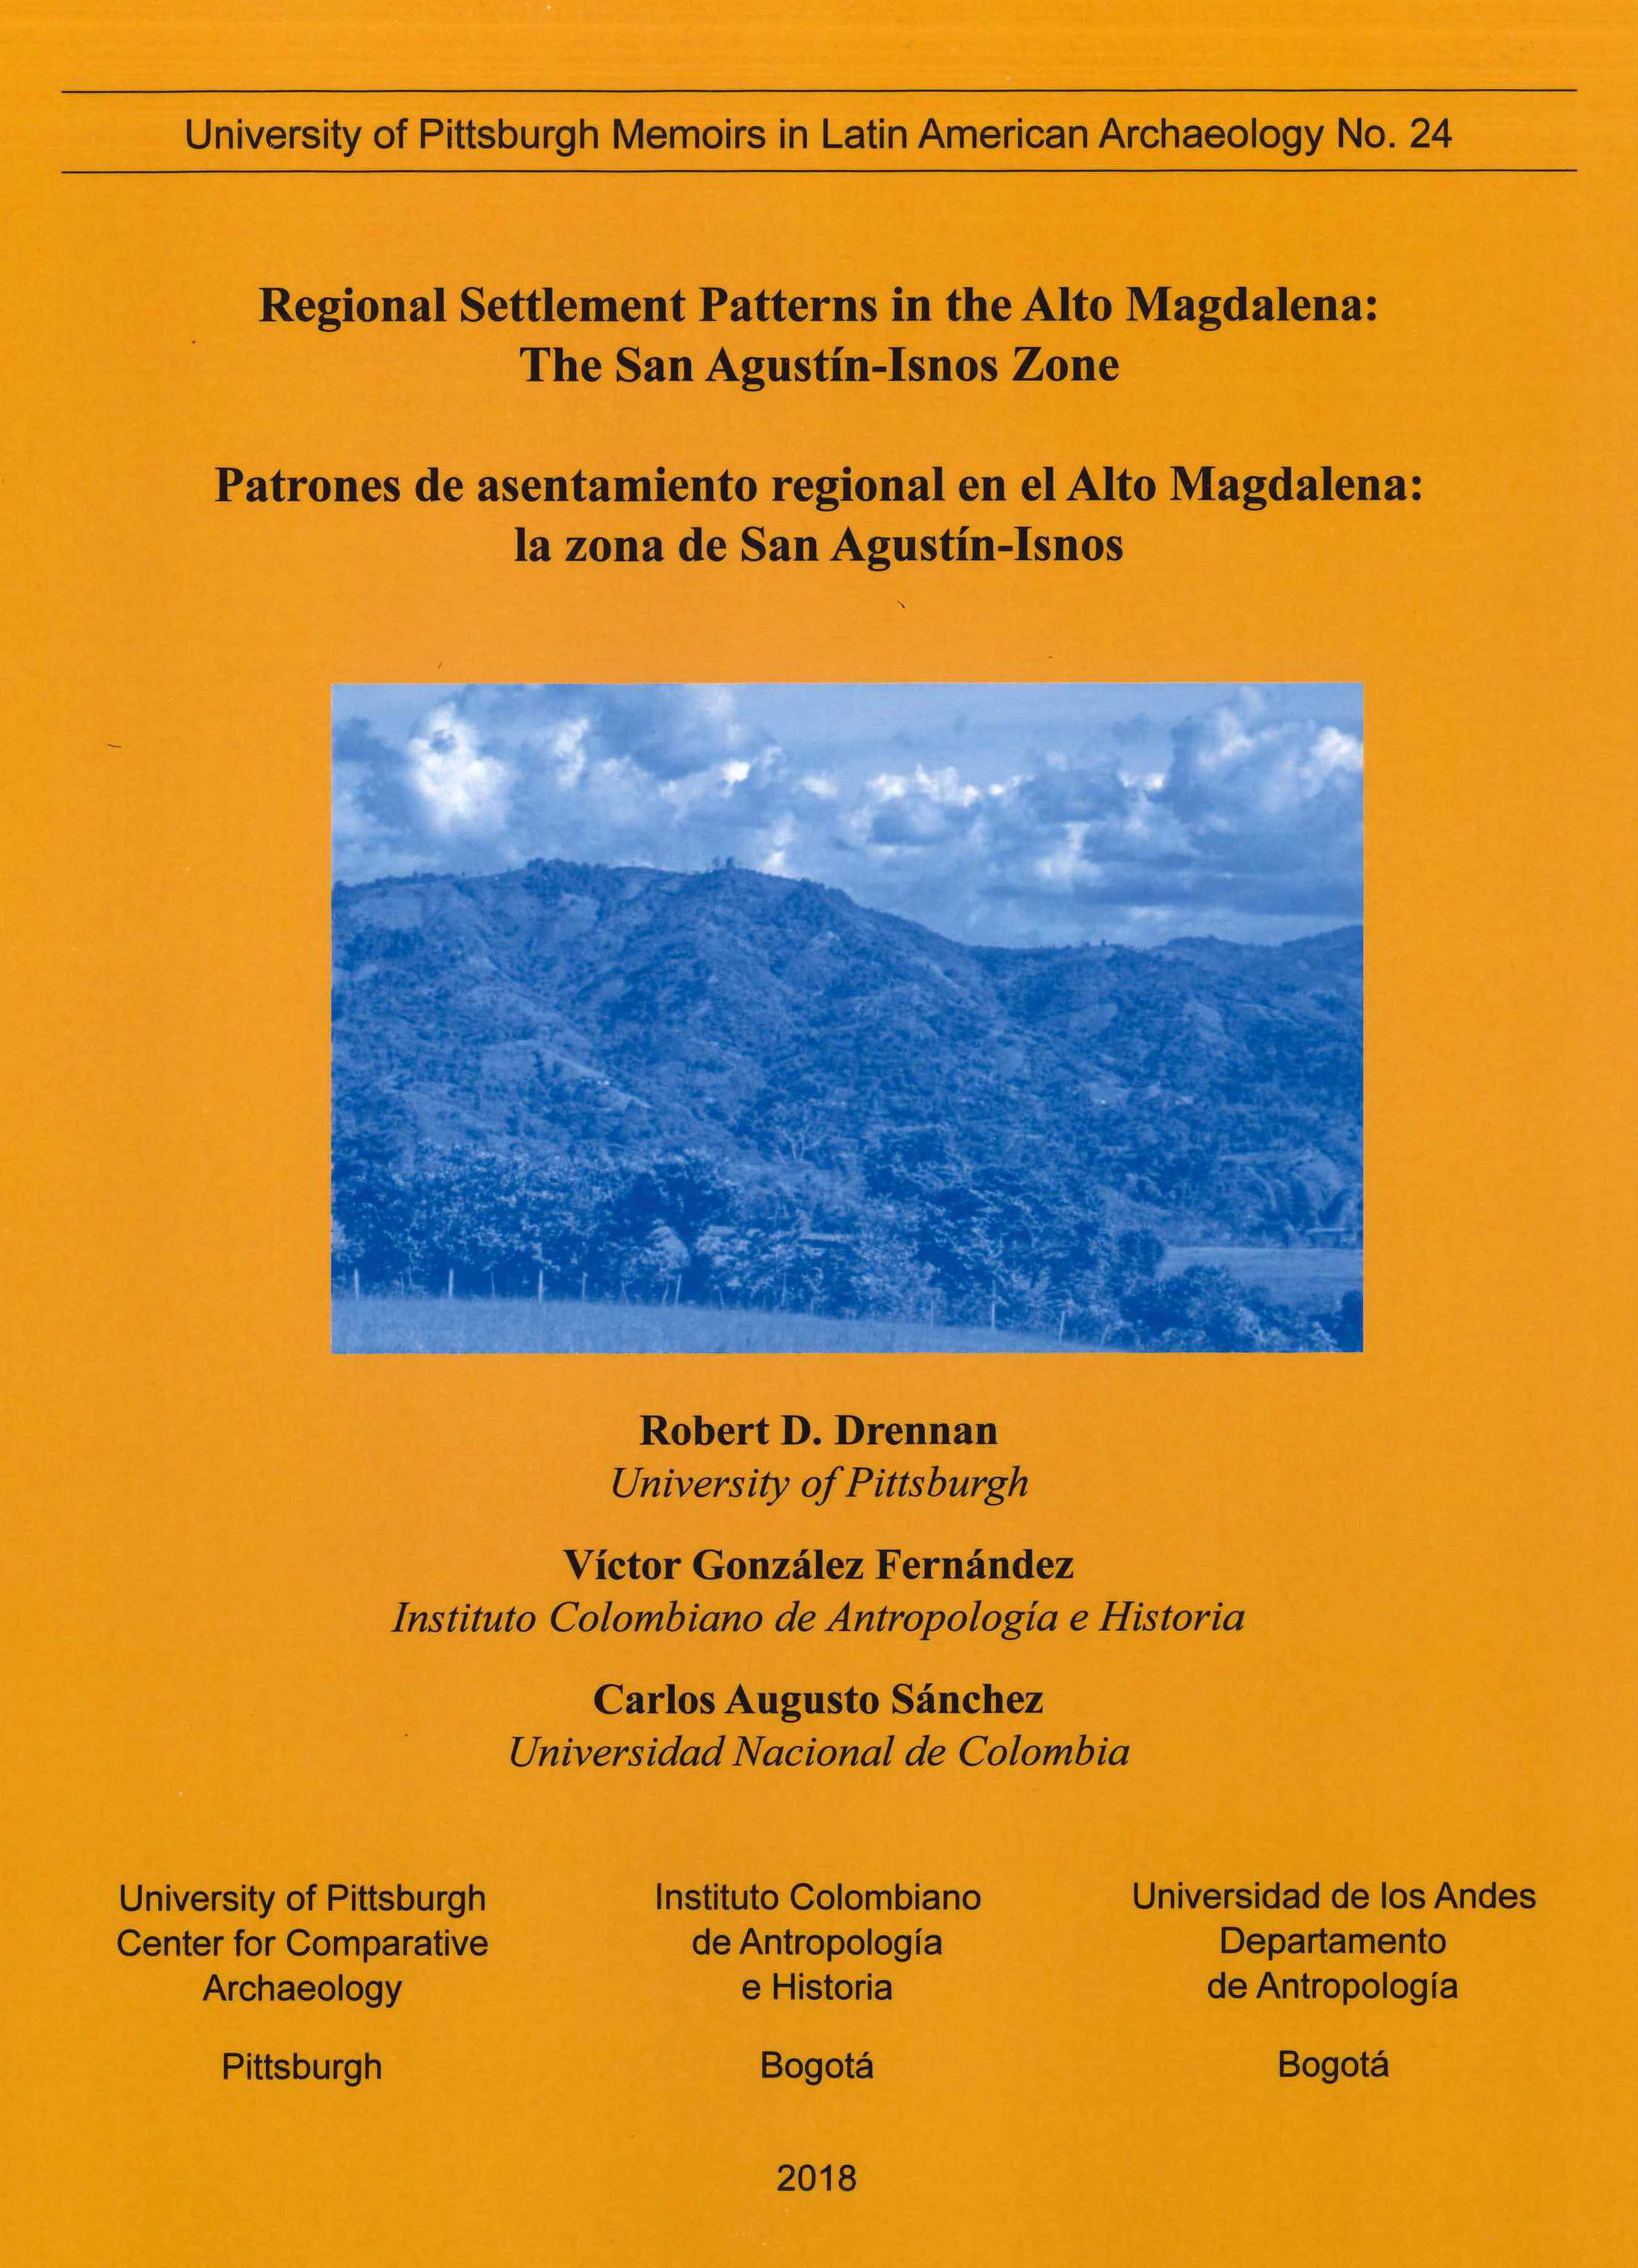 Alto Magdalena, San Agustin-Isnos Zone cover